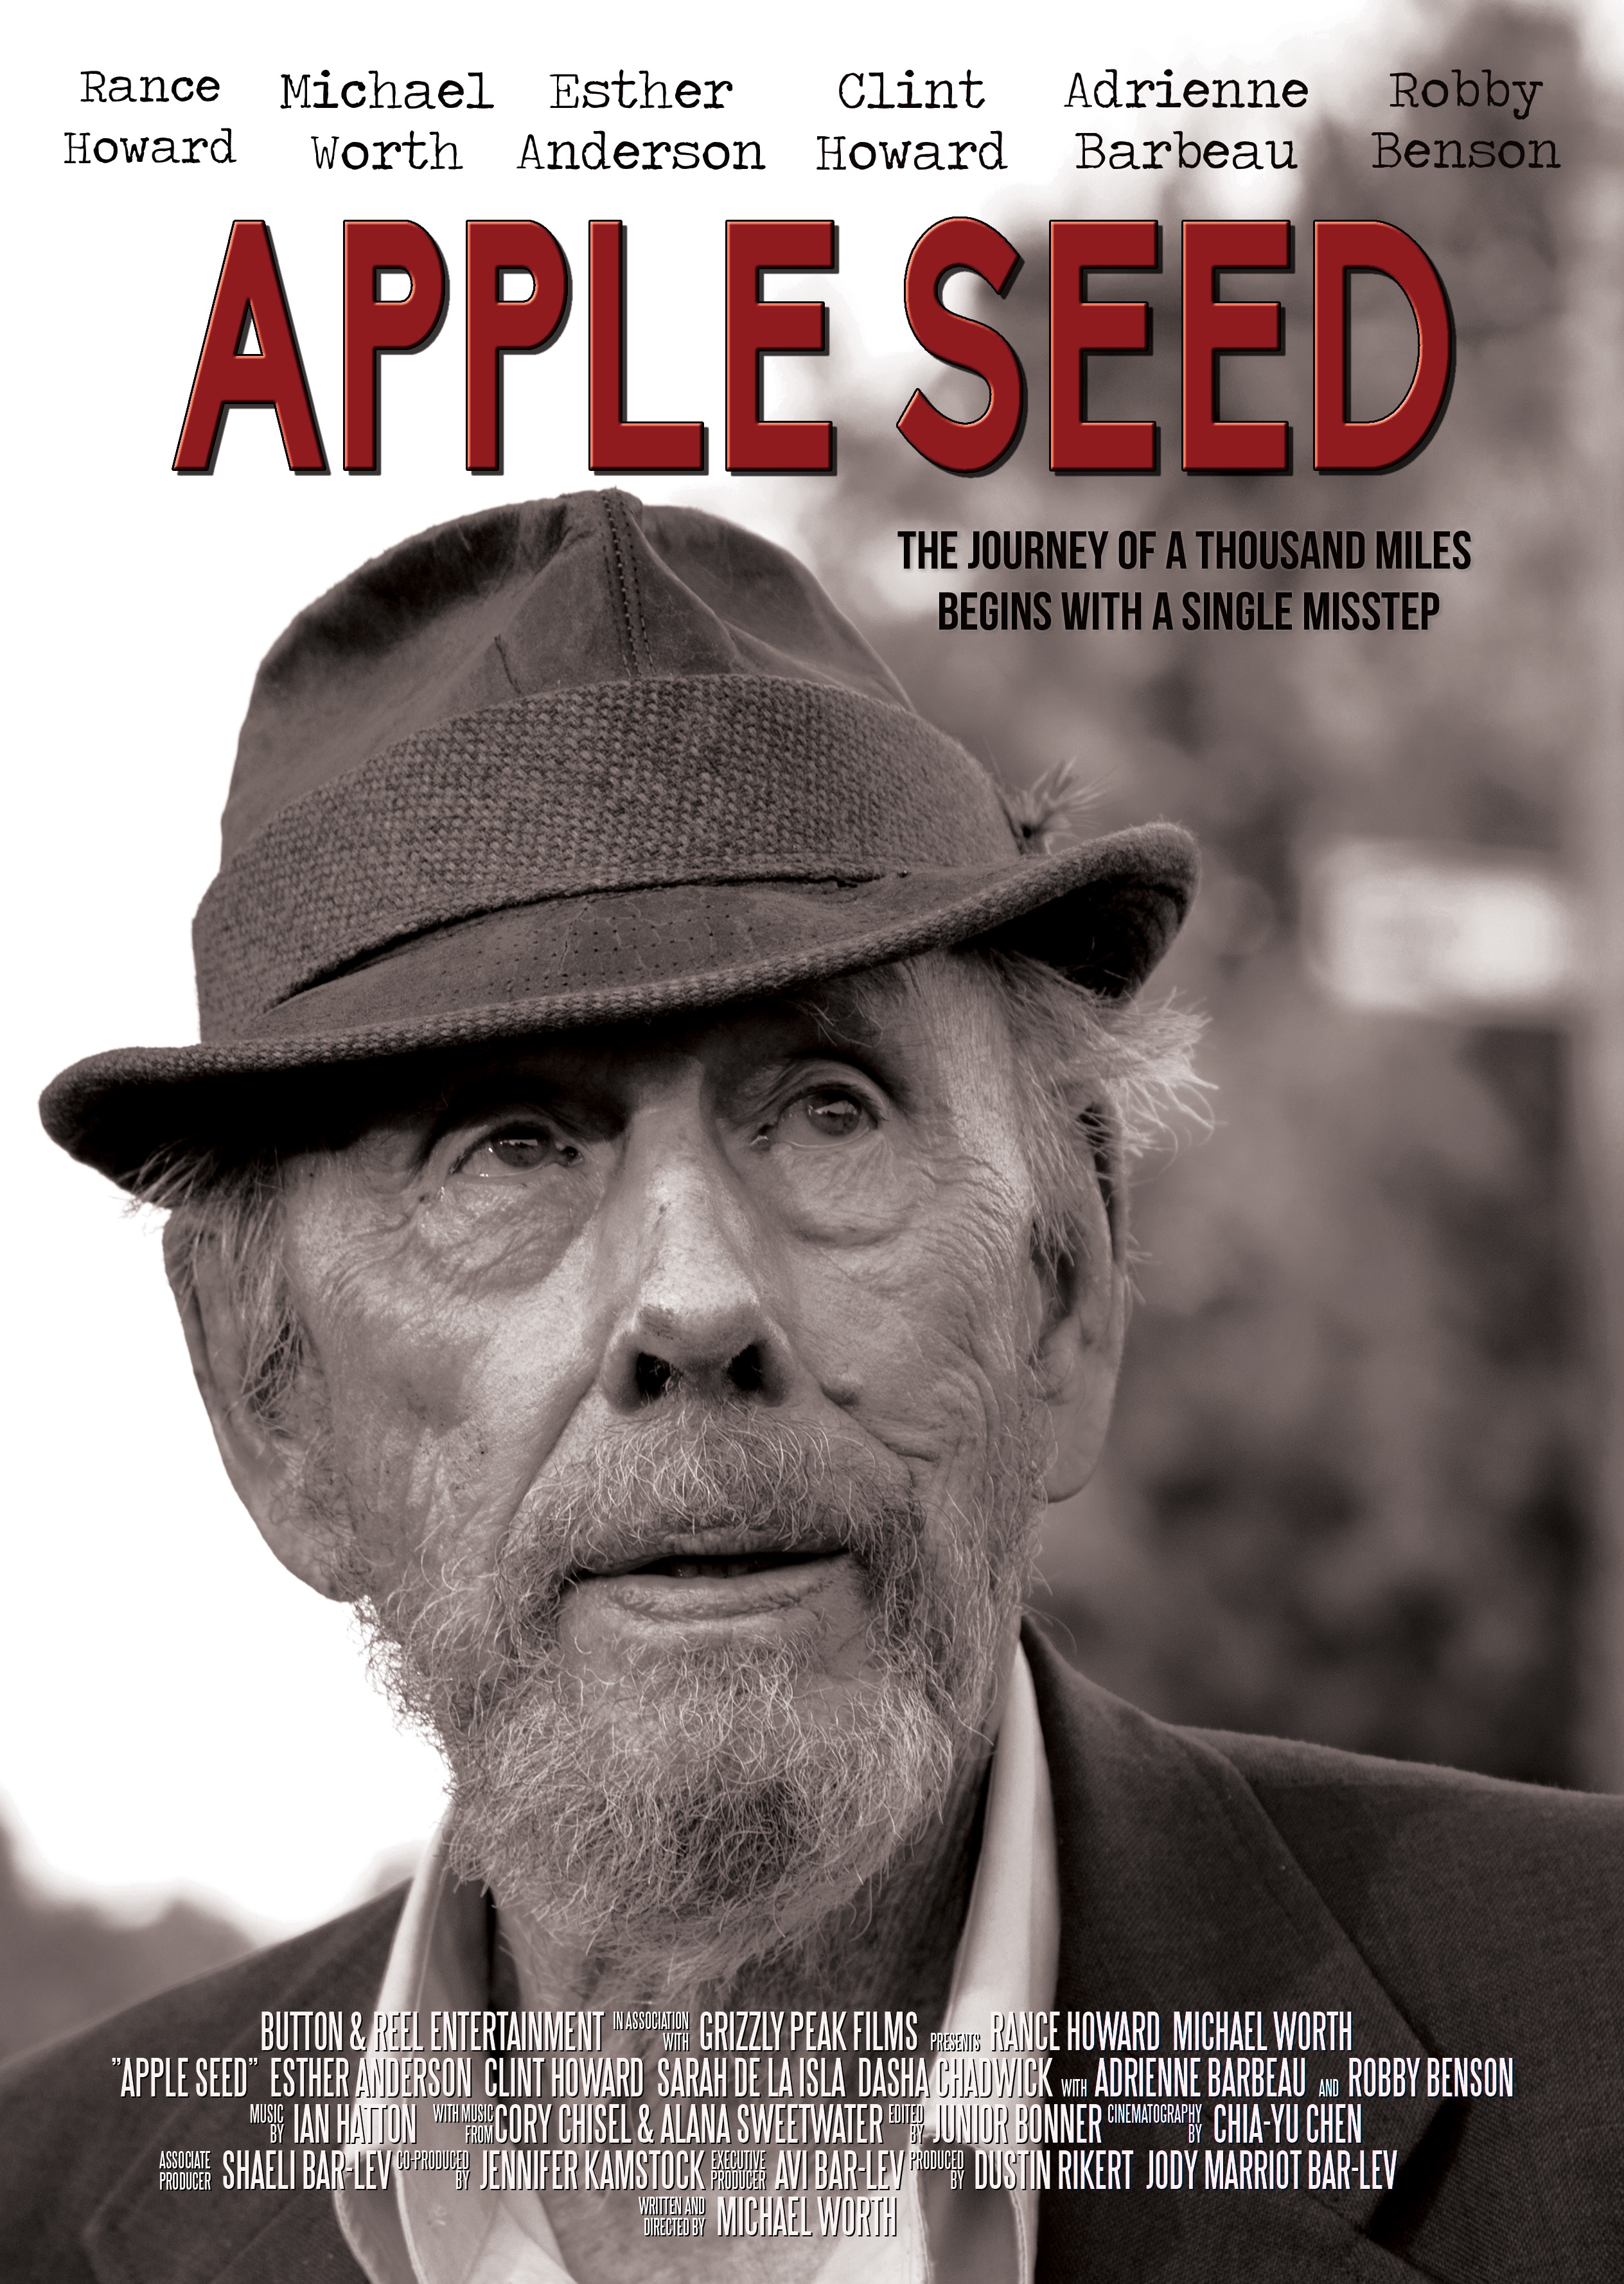 Apple-Seed-movie-poster3